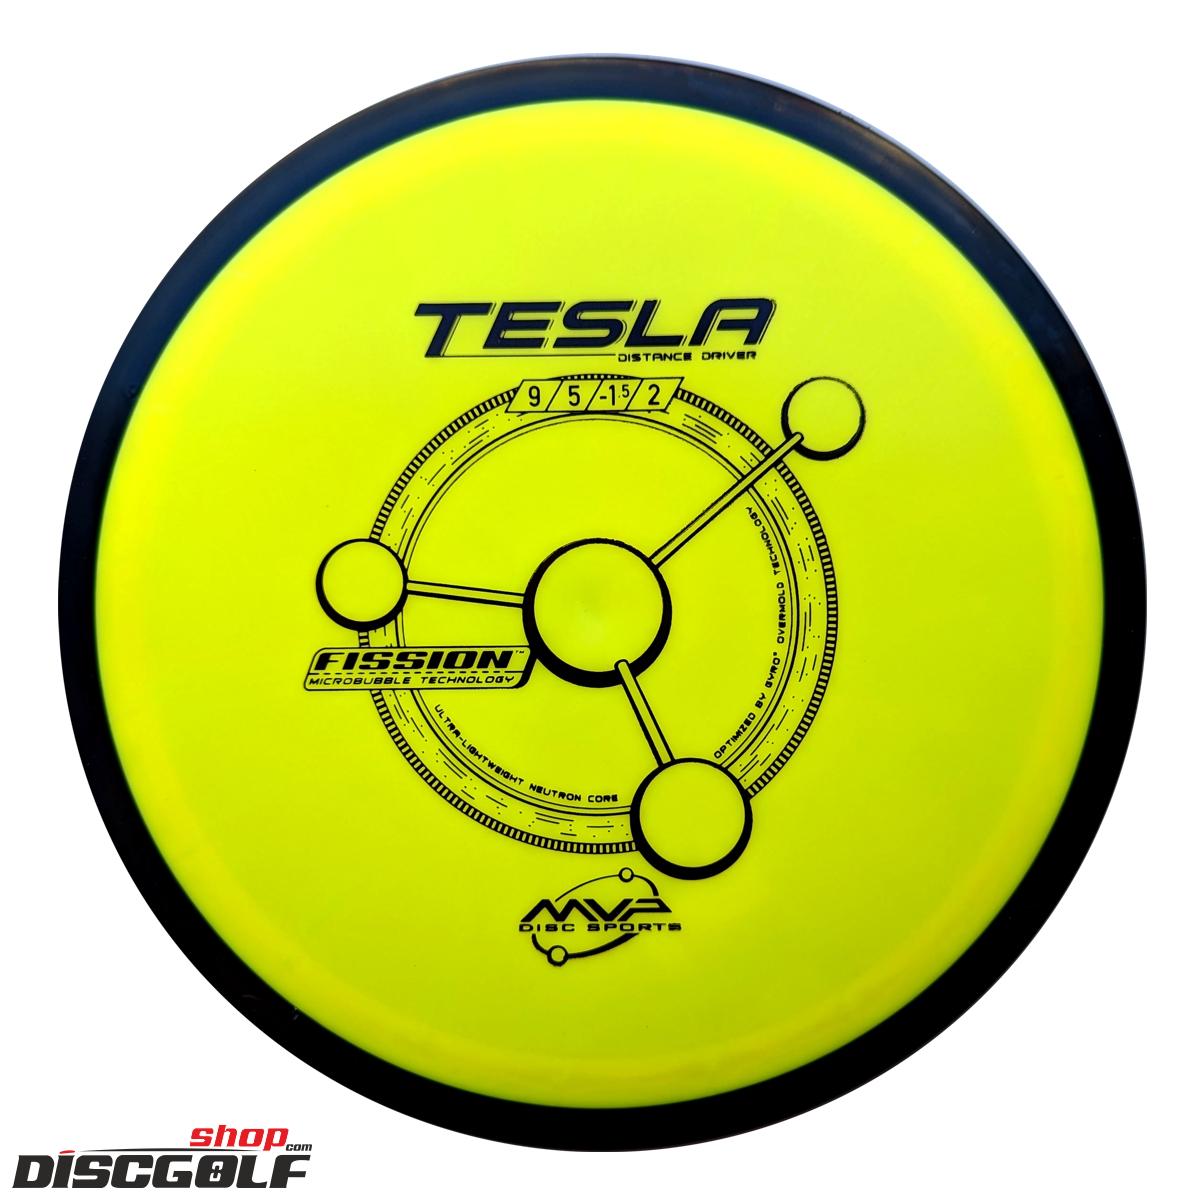 MVP Tesla Fission (discgolf)